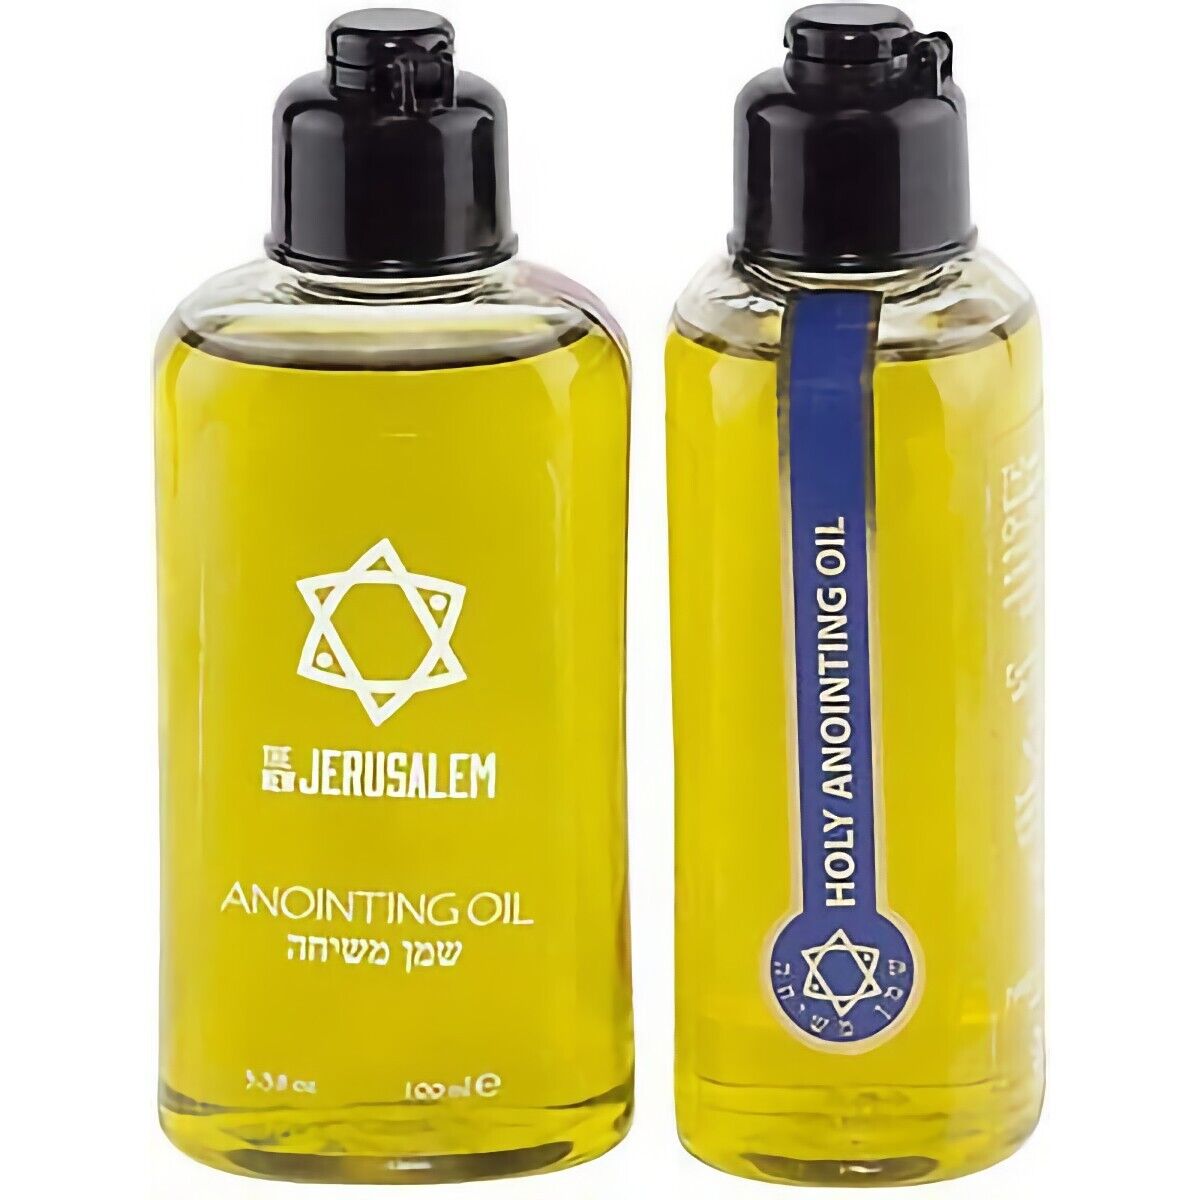 Premium Holy Anointing Oil 100 ml. /3.34 fl.oz Handmade Blessed from Jerusalem